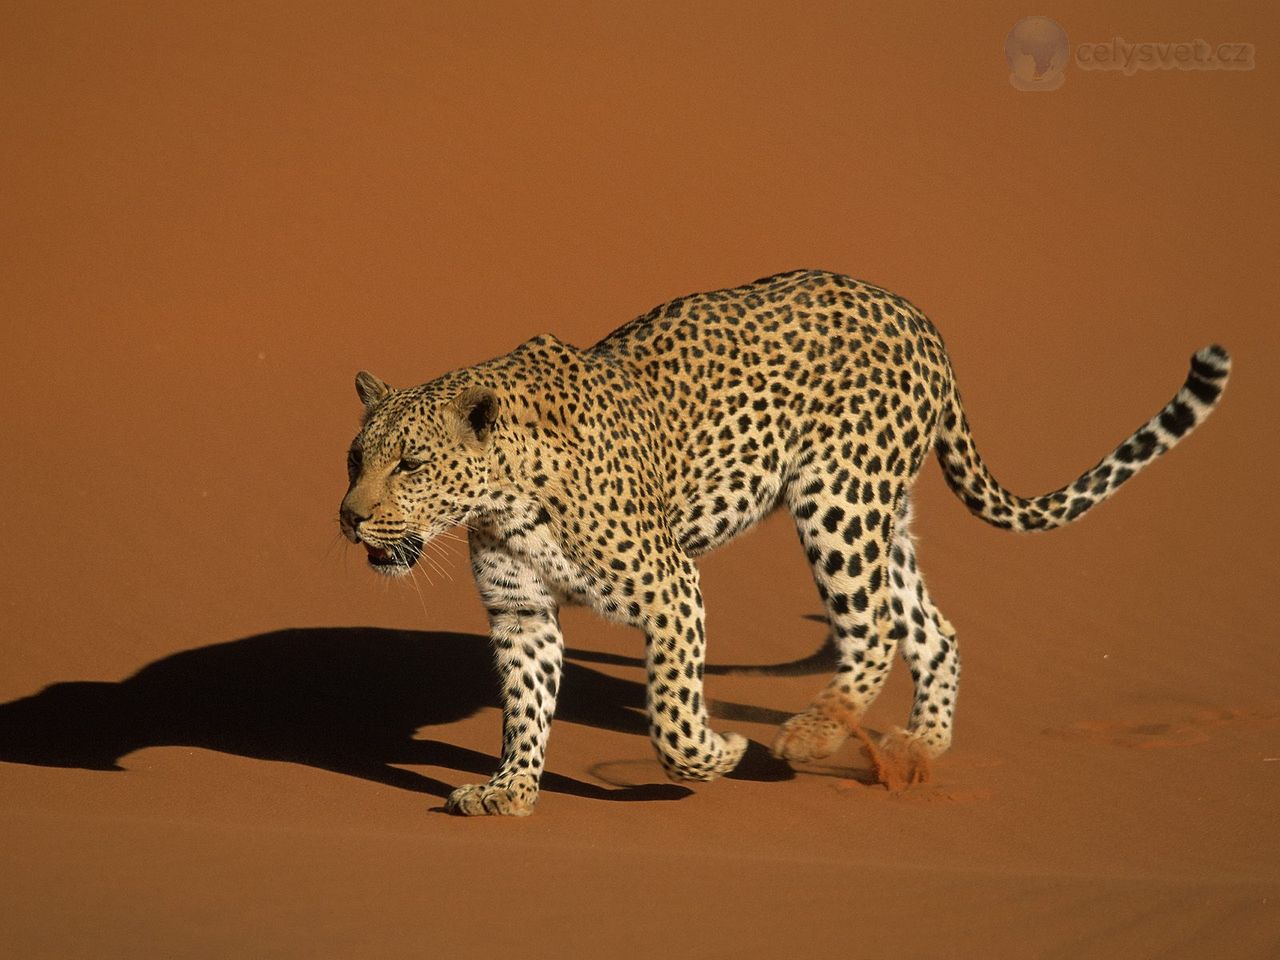 Foto: Leopard Walking Over Sand, Naukluft National Park, Namibia